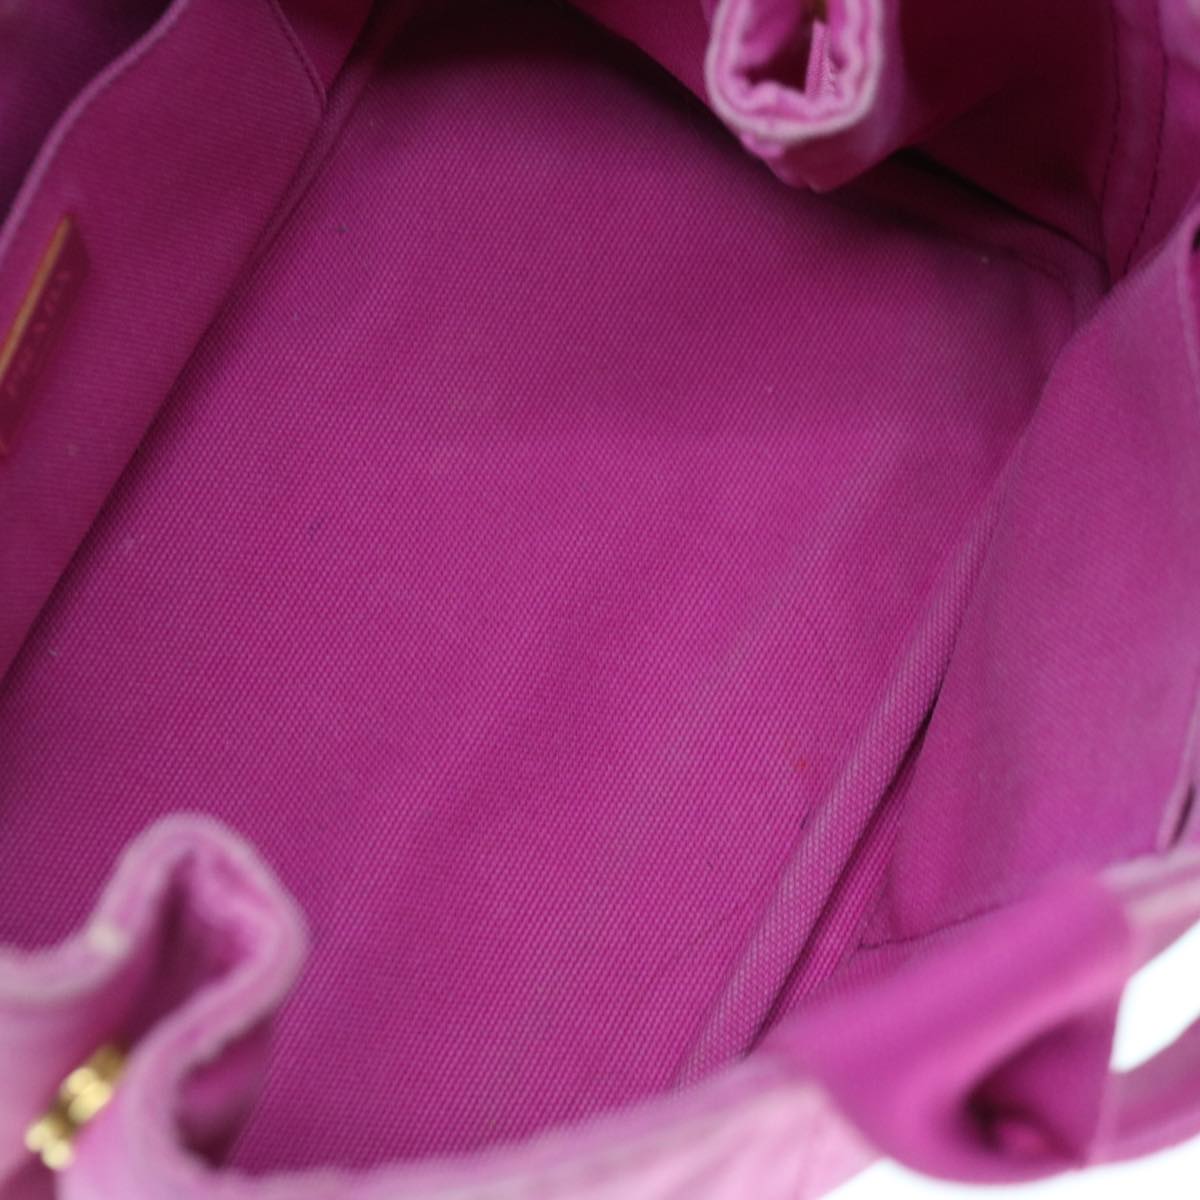 PRADA Canapa PM Hand Bag Canvas Pink Auth fm3153